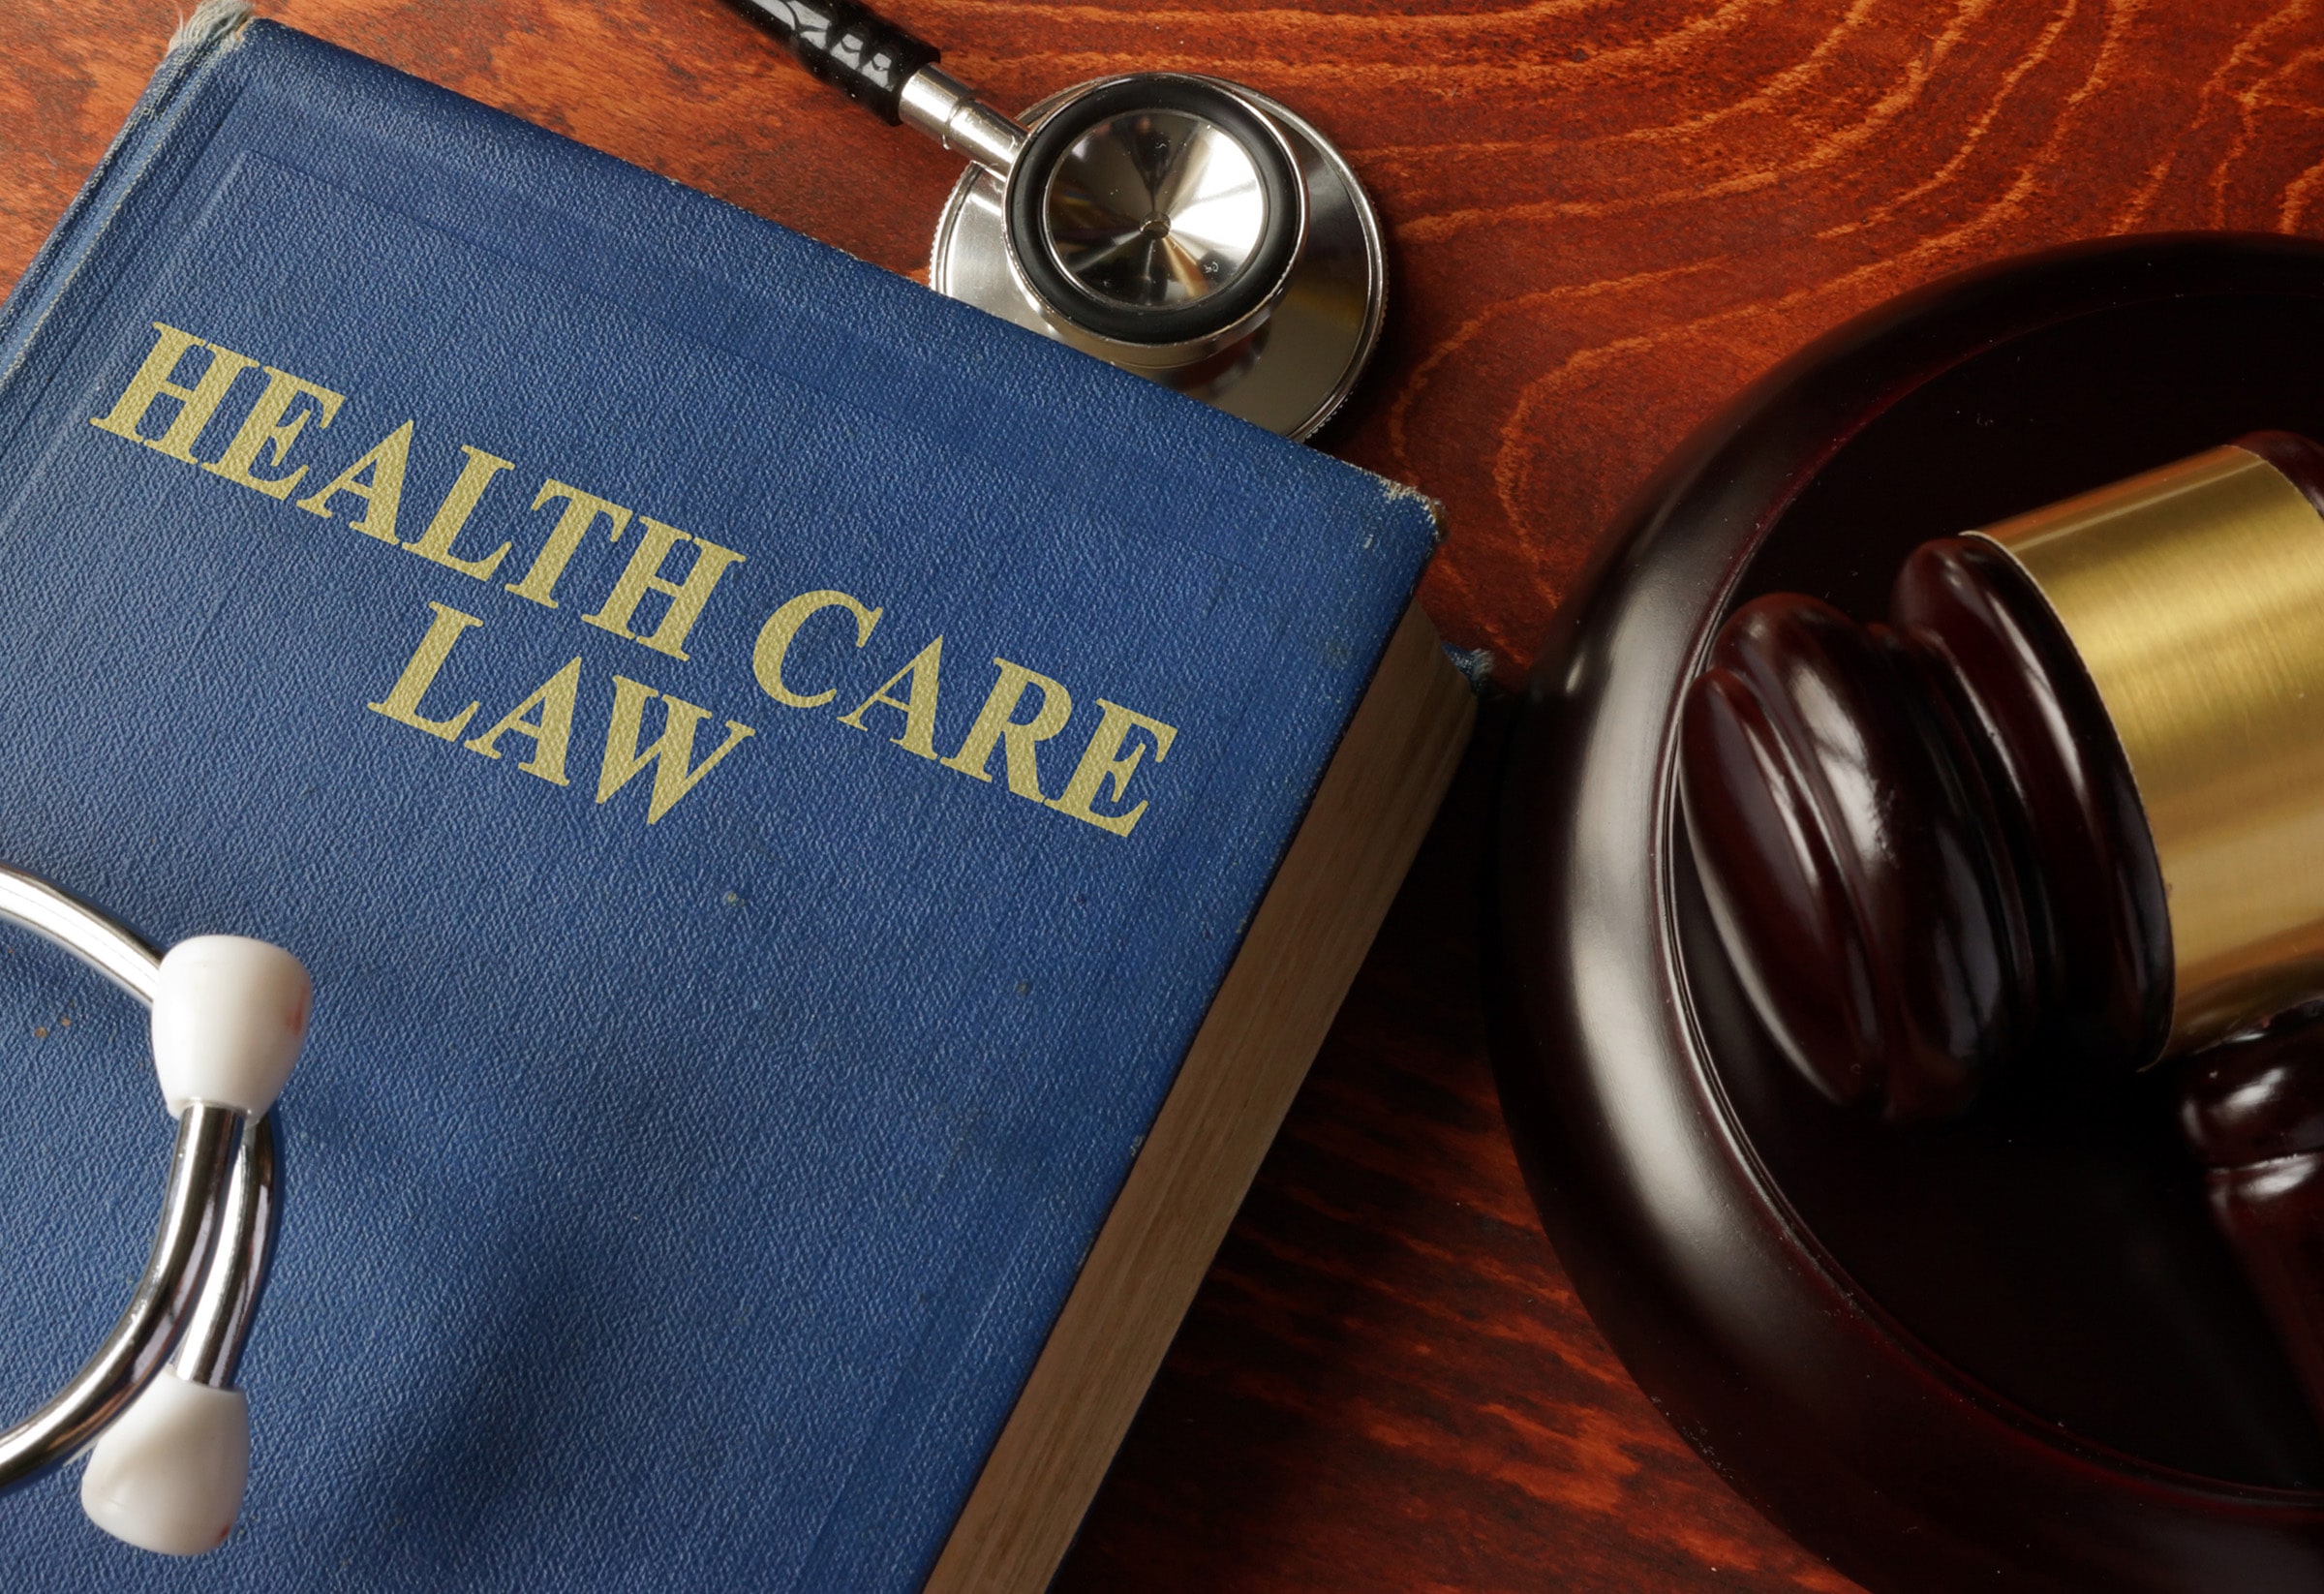 Healthcare Law